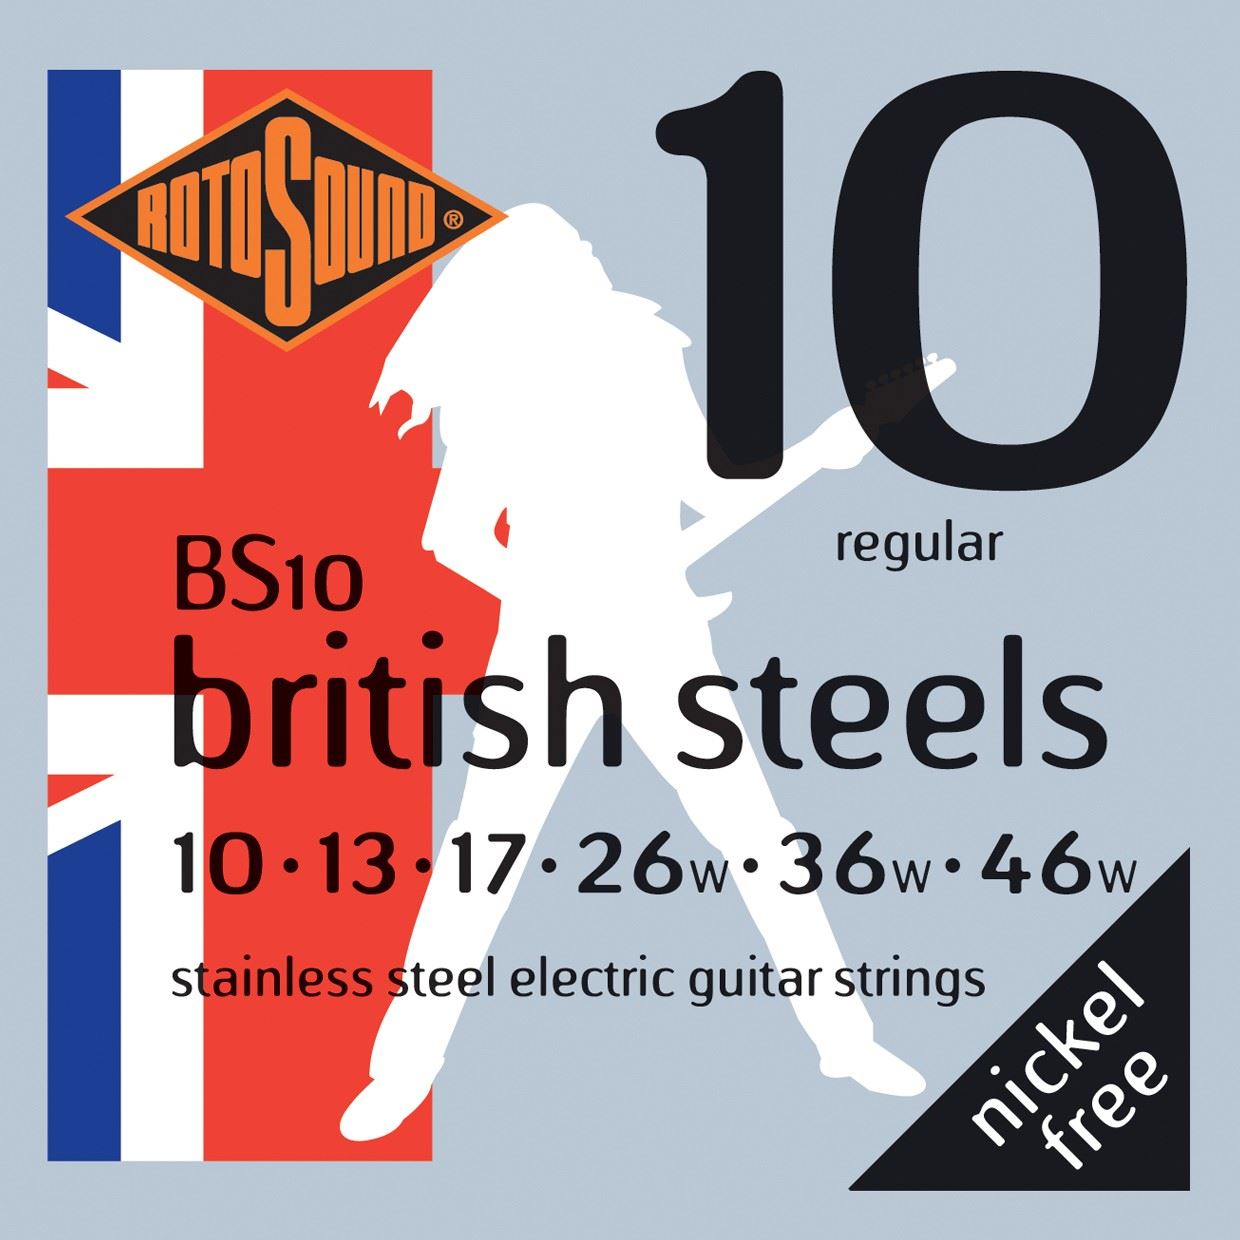 Rotosound BS10 British Steels Electric Guitar Strings Gauge 10-46